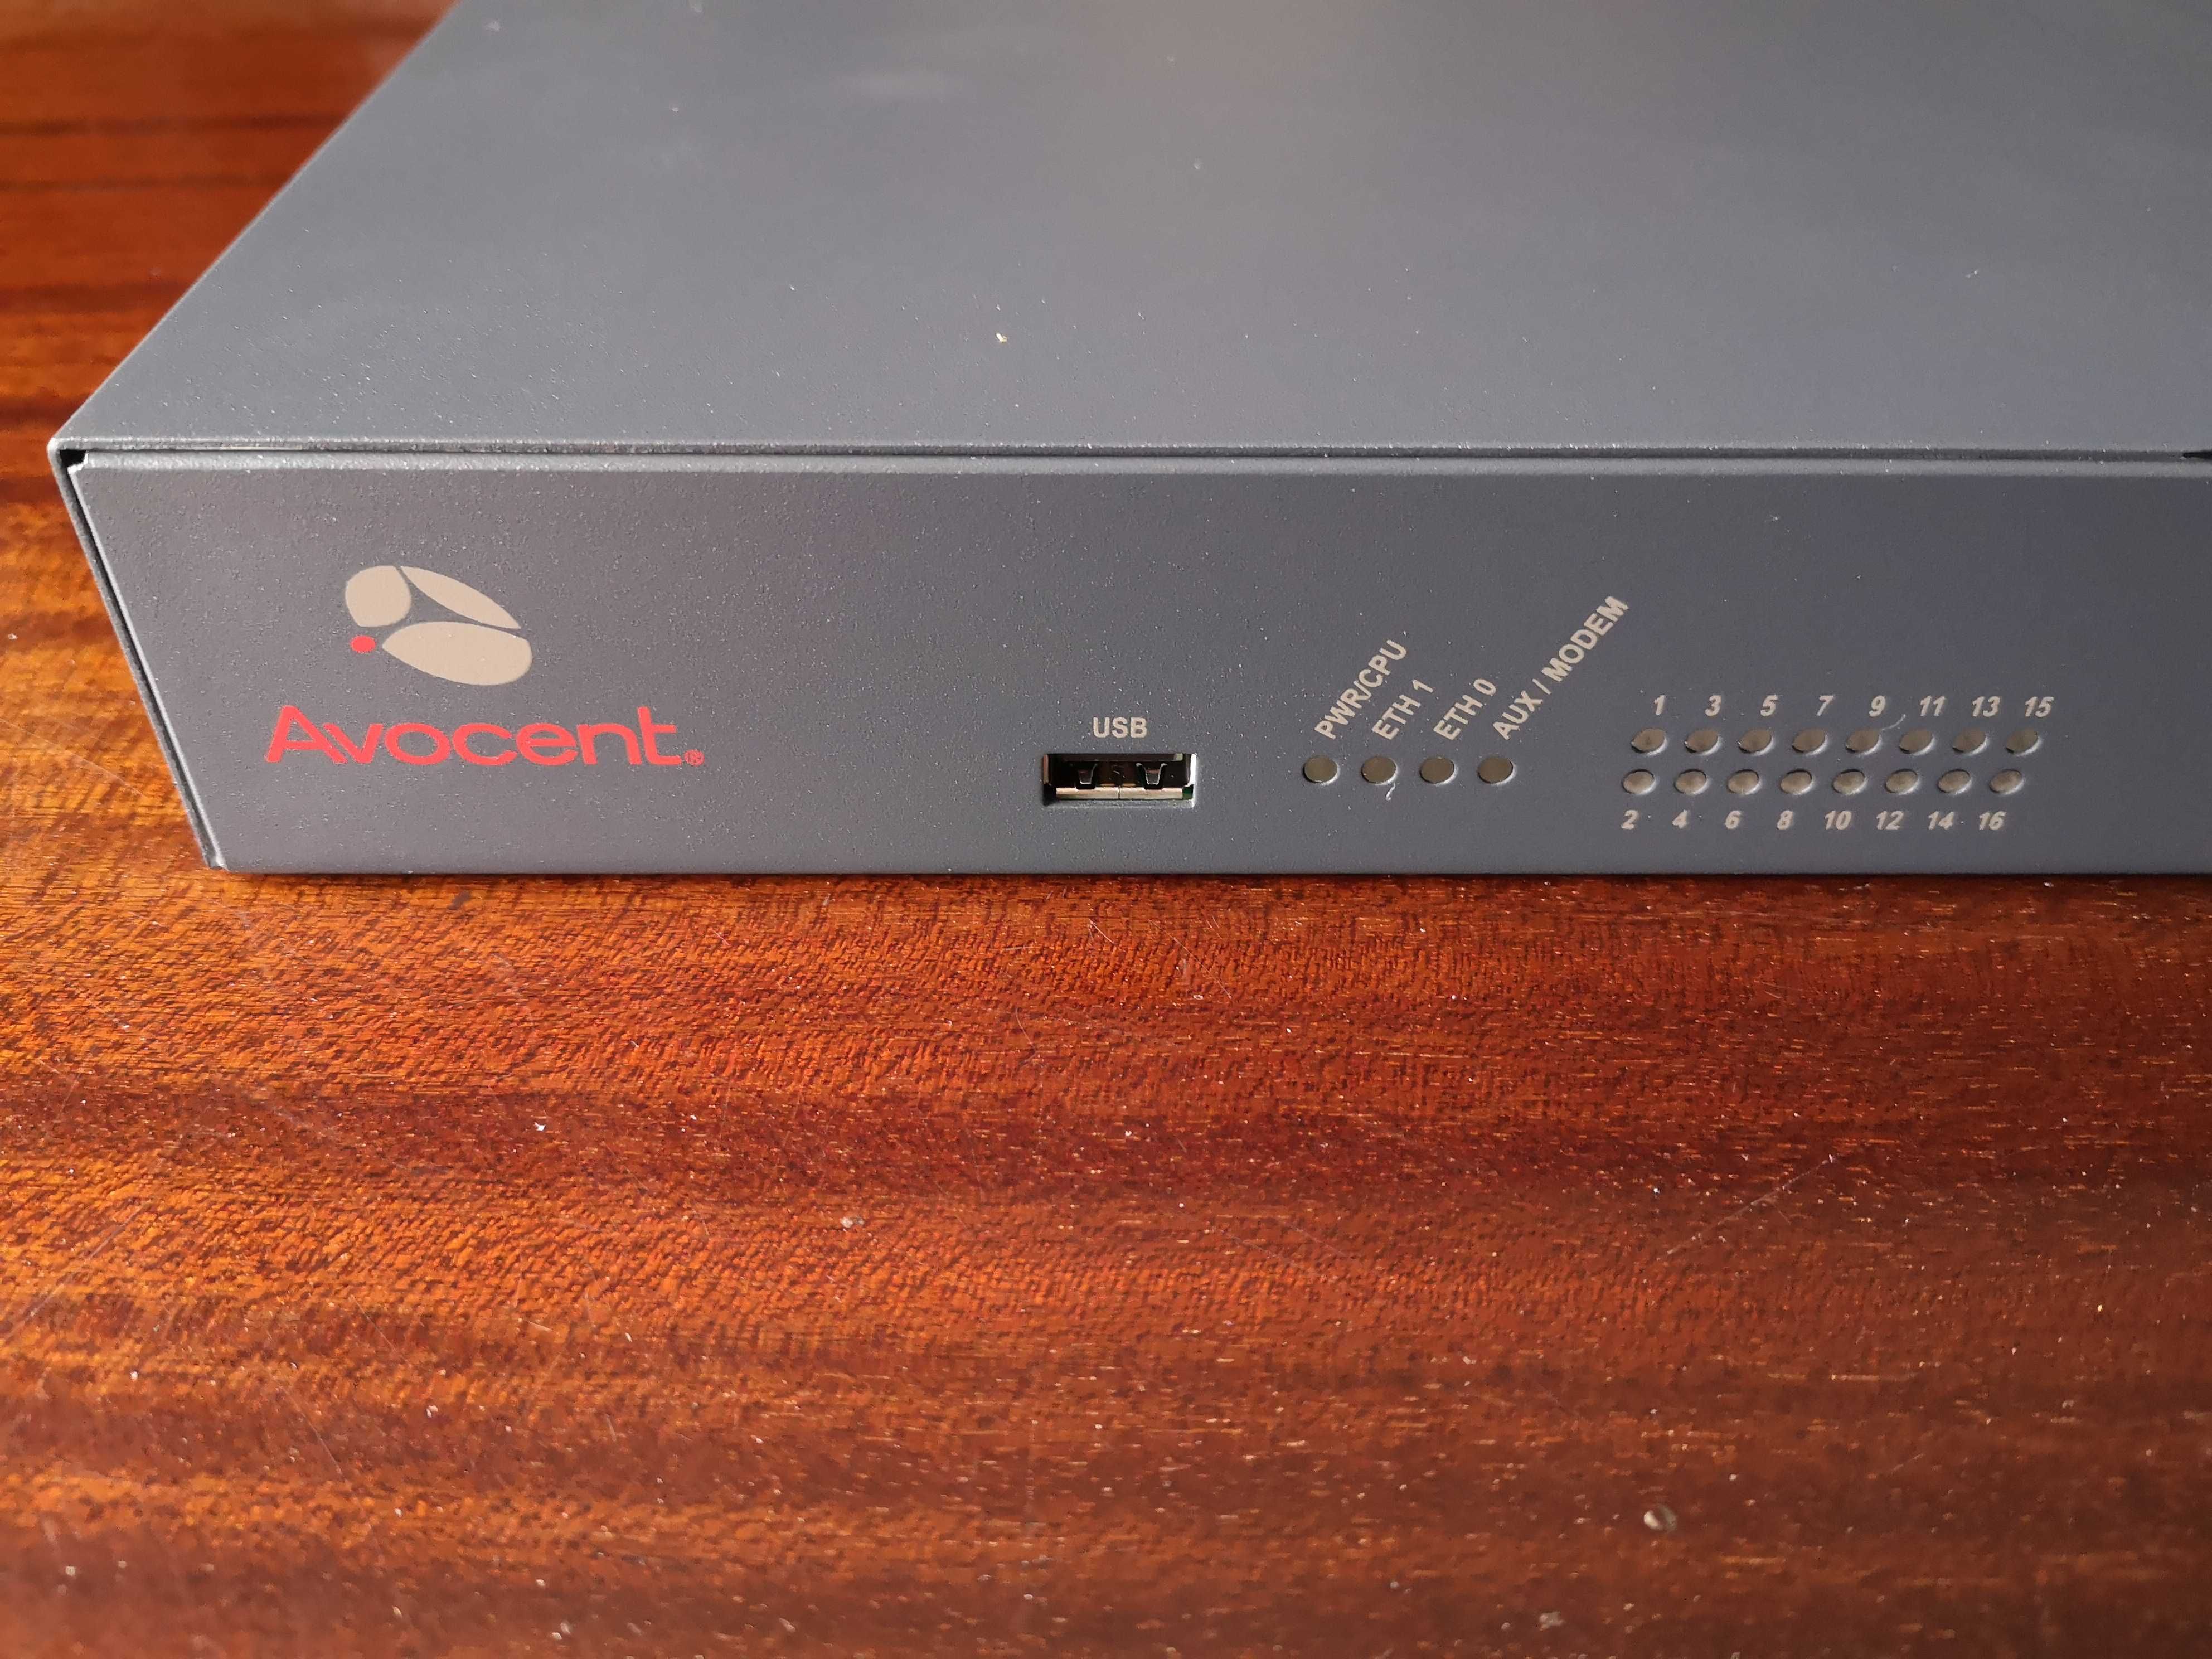 Cisco Avocent ACS 6016 16-Port Advanced Console Server, Gigabit Switch